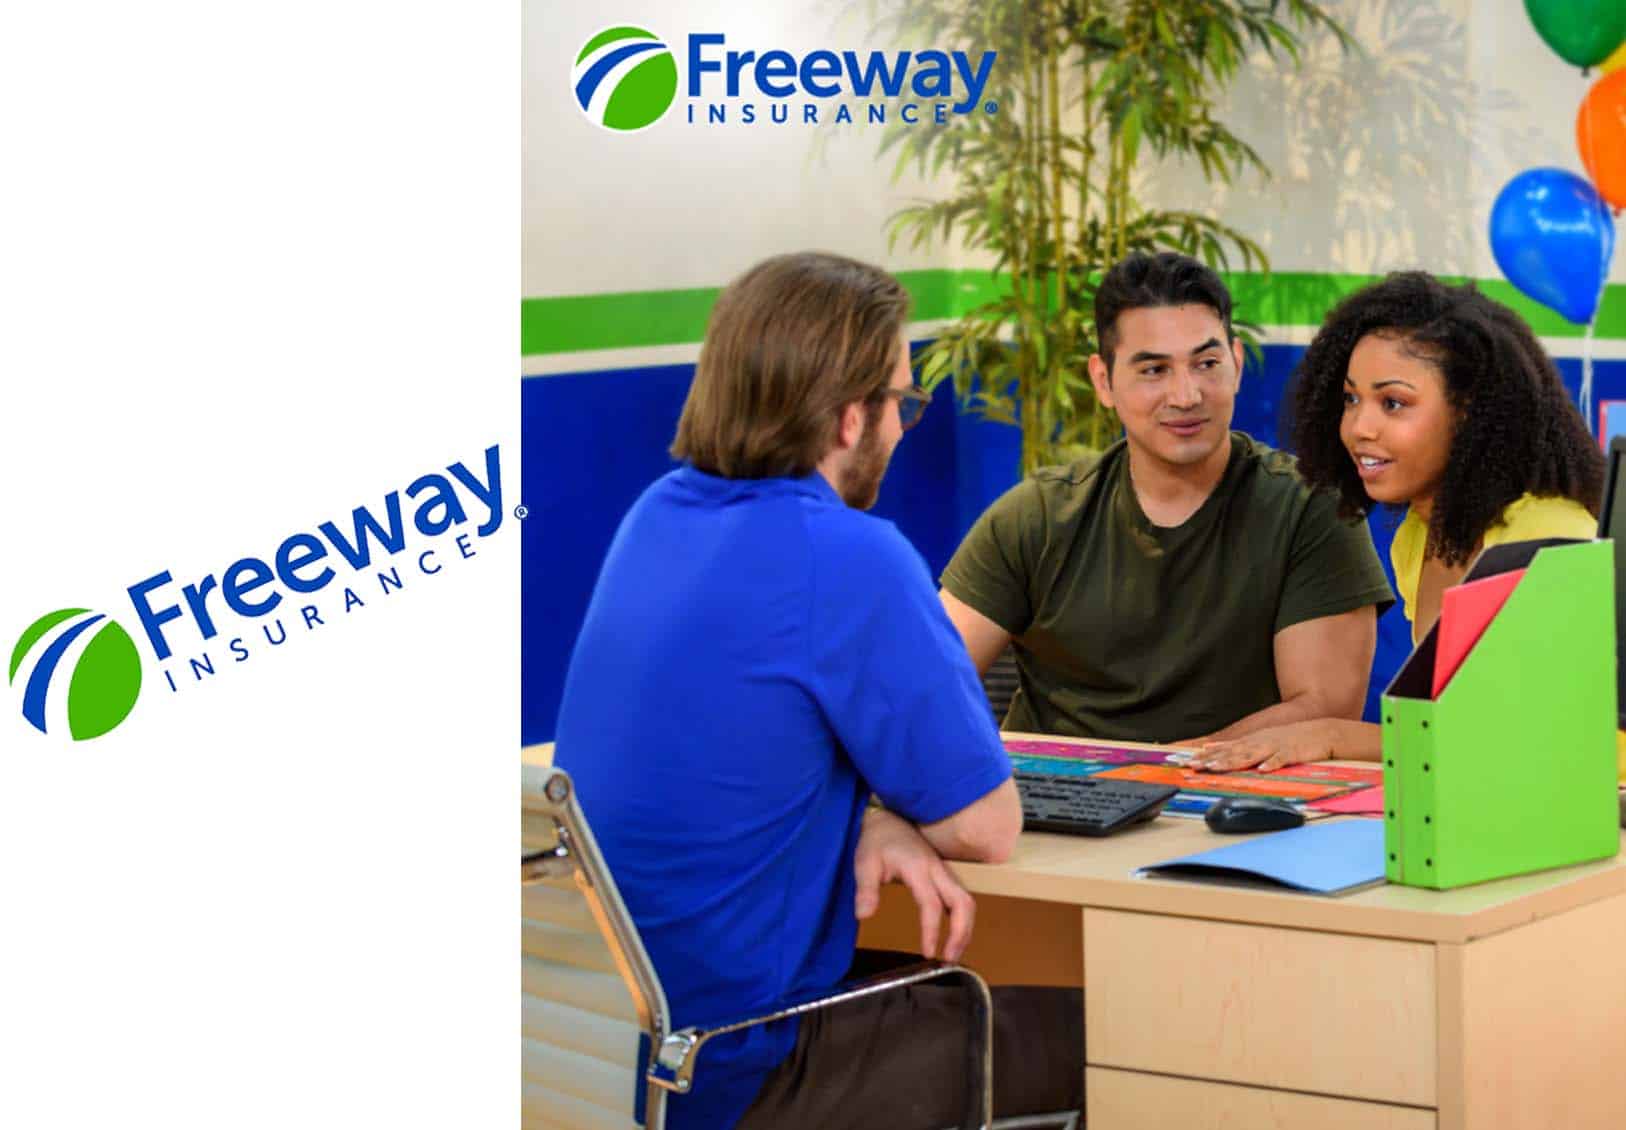 Freeway Insurance - Affordable & Best Auto Insurance at www.freewayinsurance.com